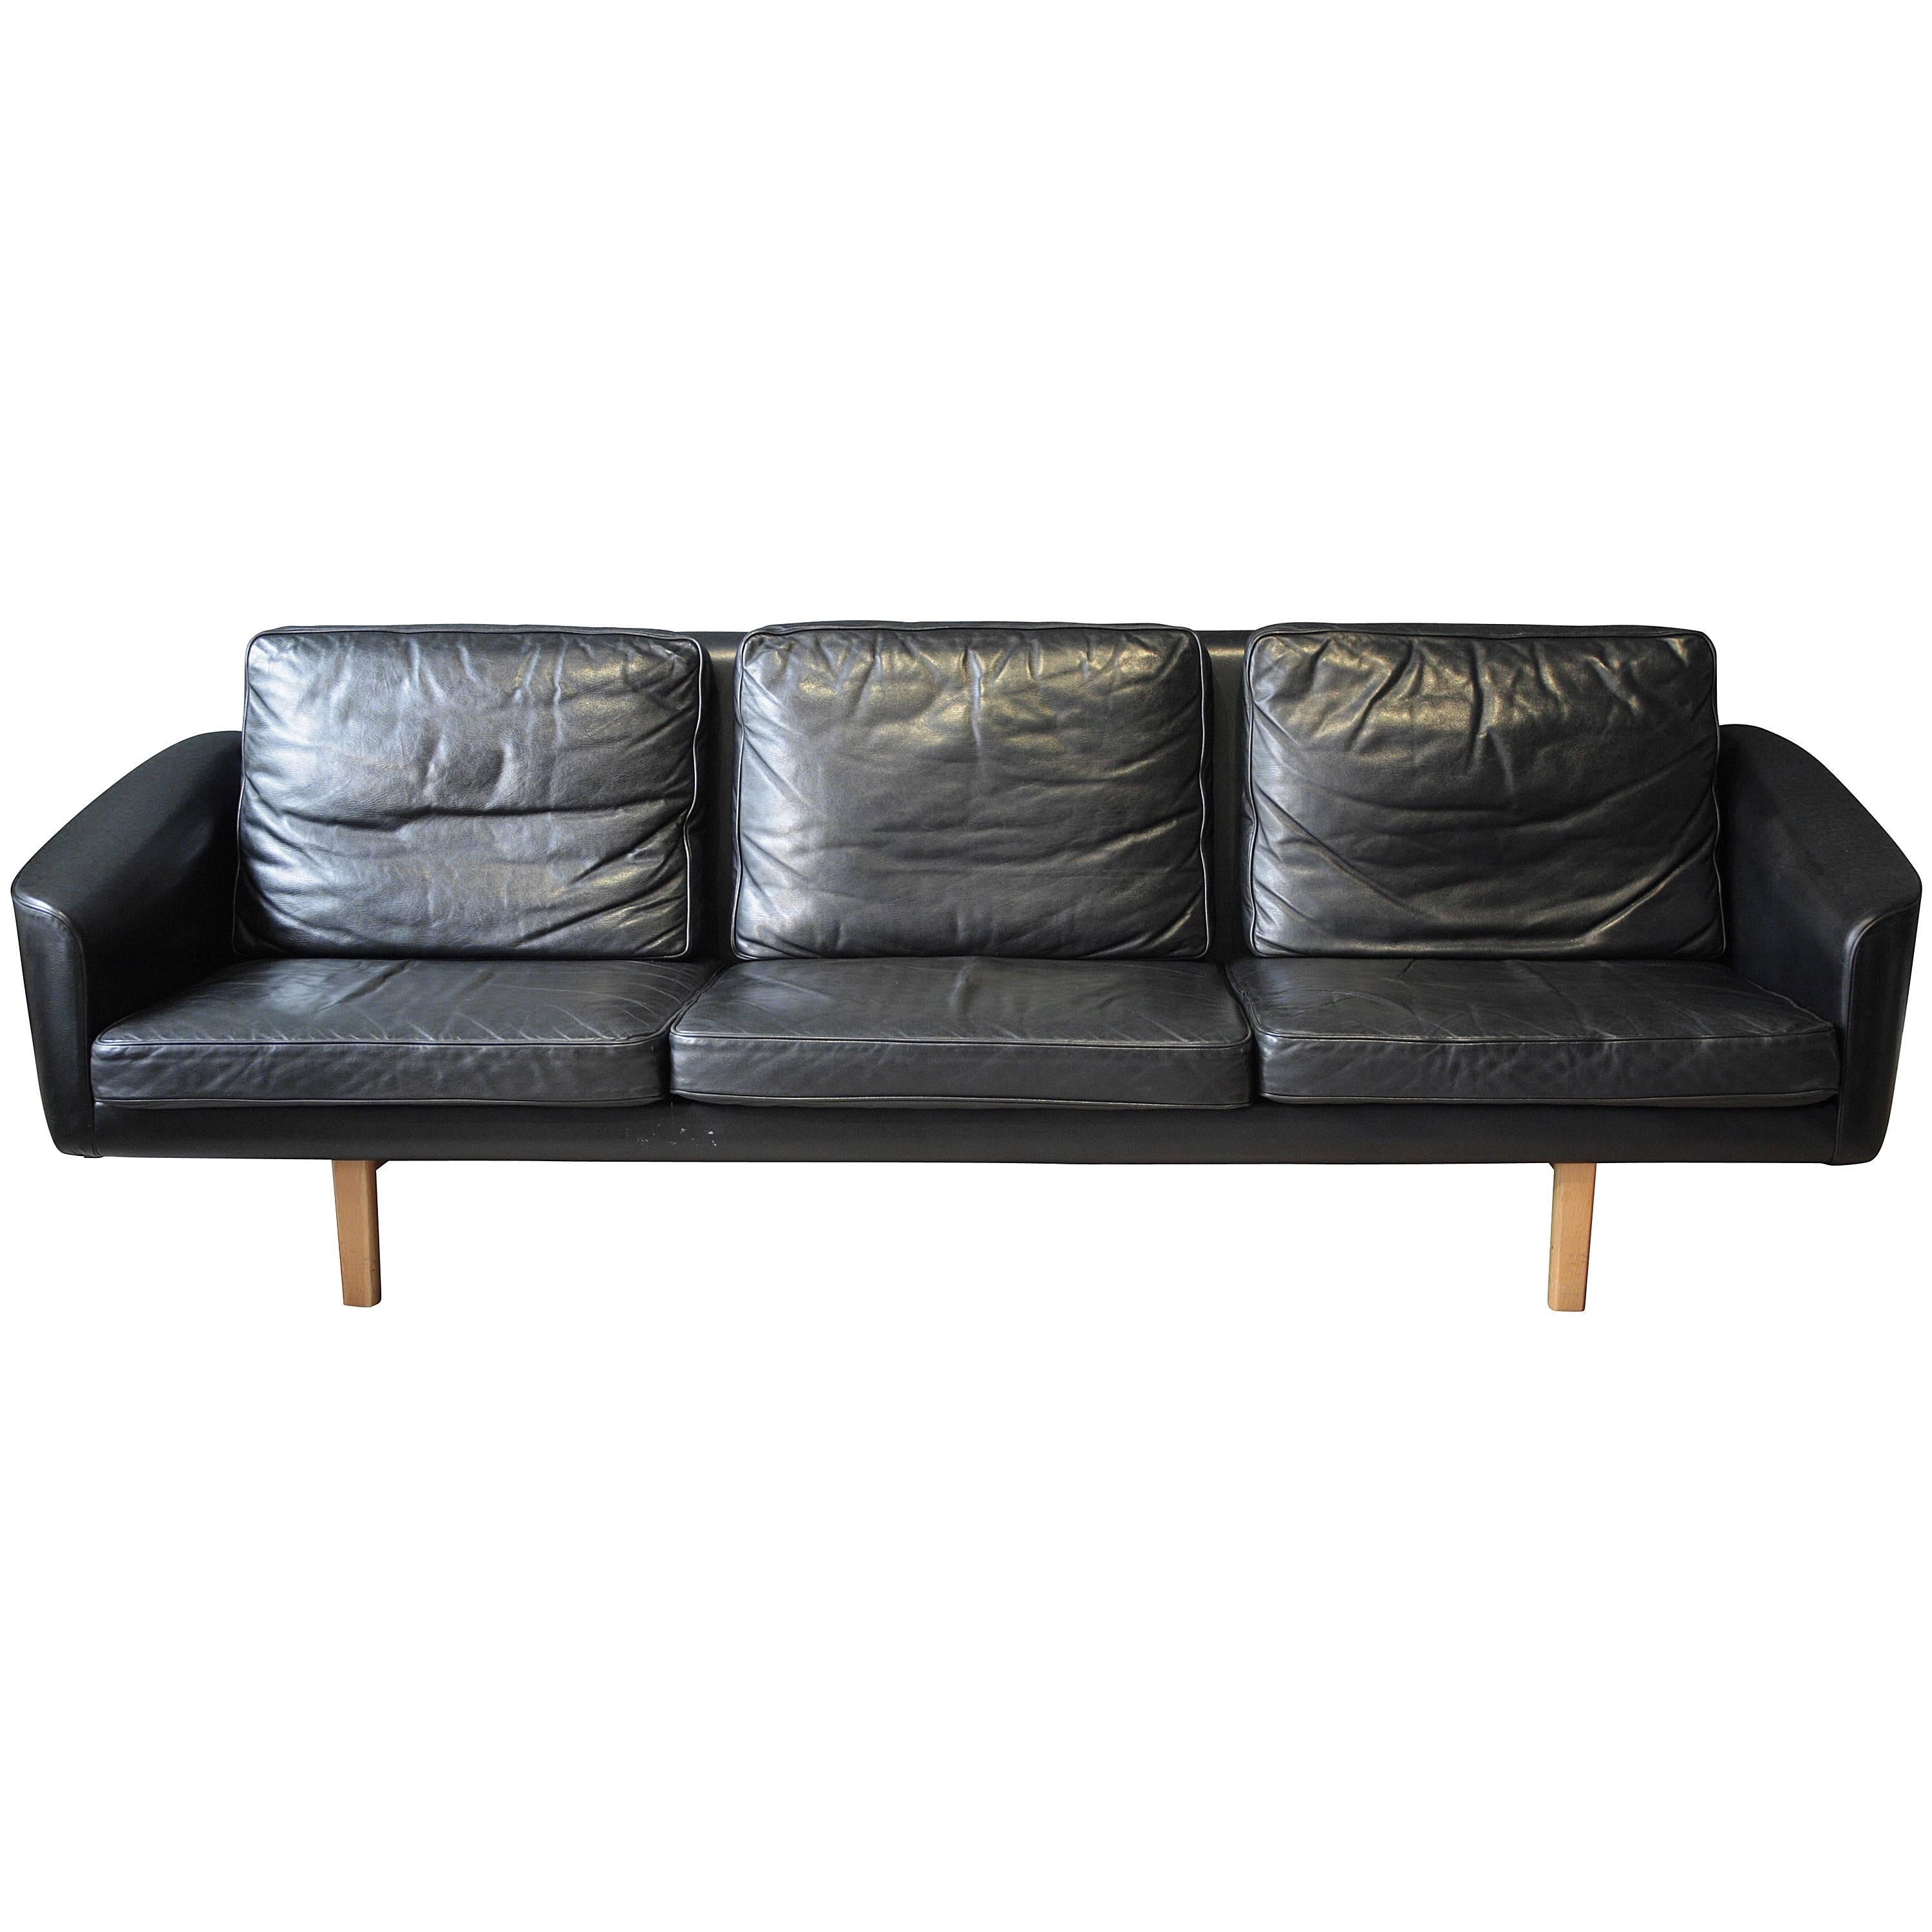 Swedish Three-Seat Leather Sofa by Lennart Bender for Ulferts, 1960s